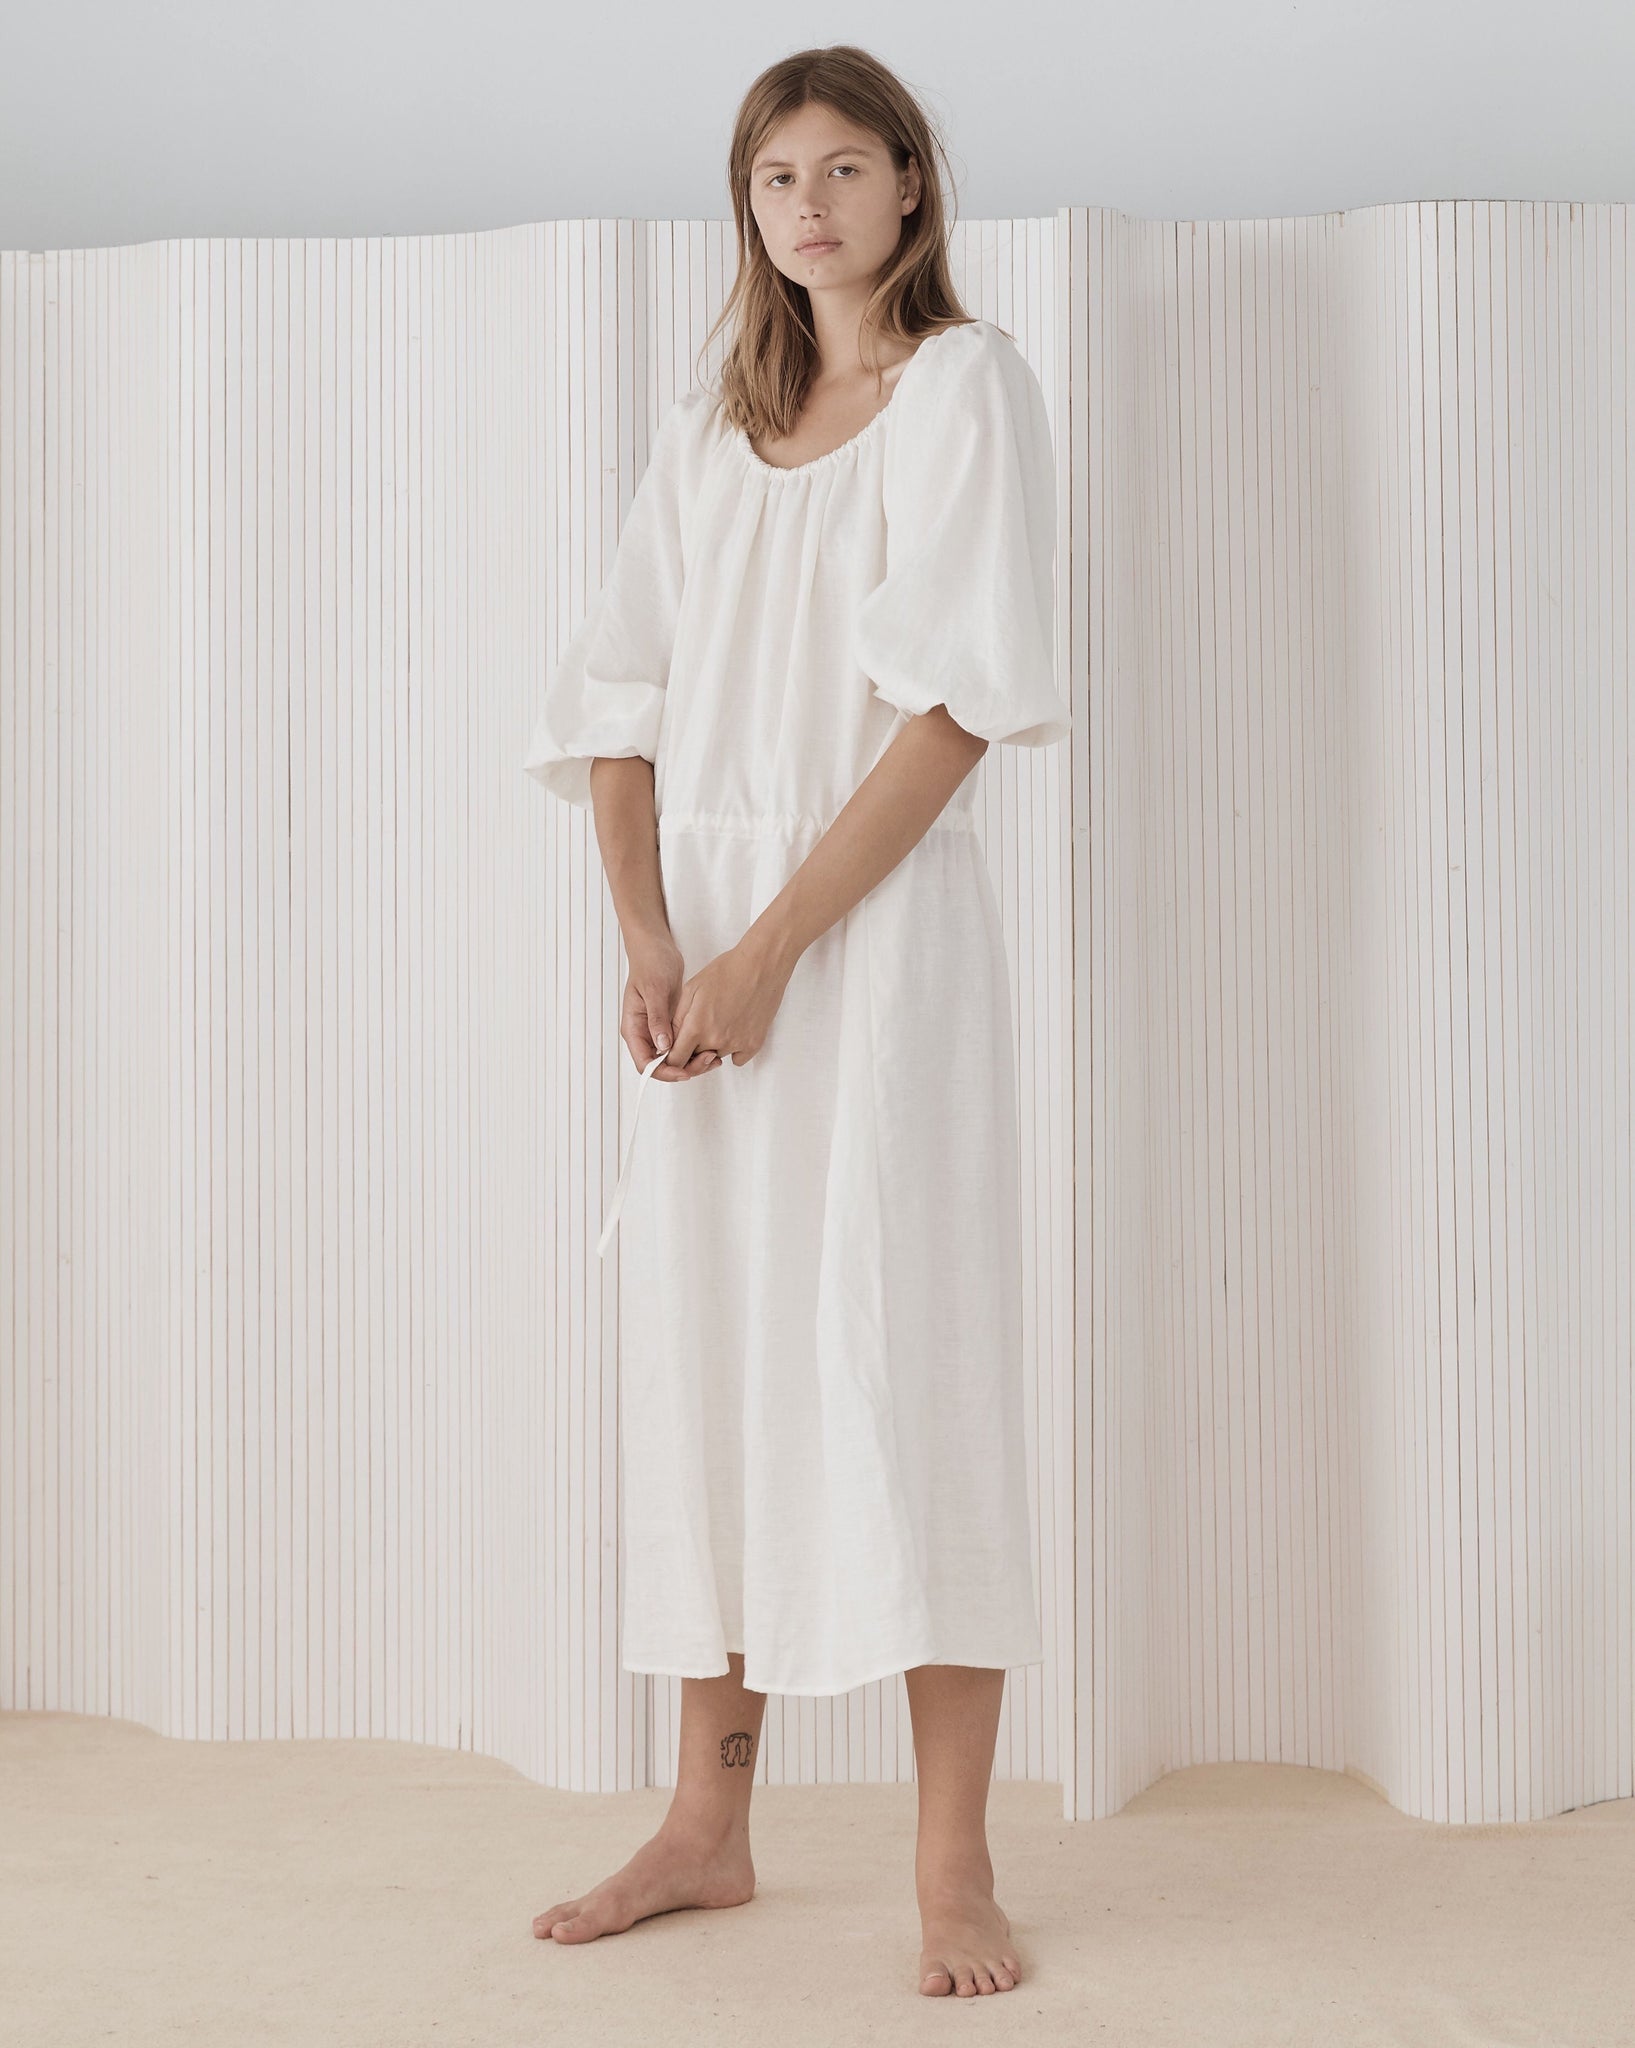 Deiji Studios Sleep Dress in White – F U G G I A M O